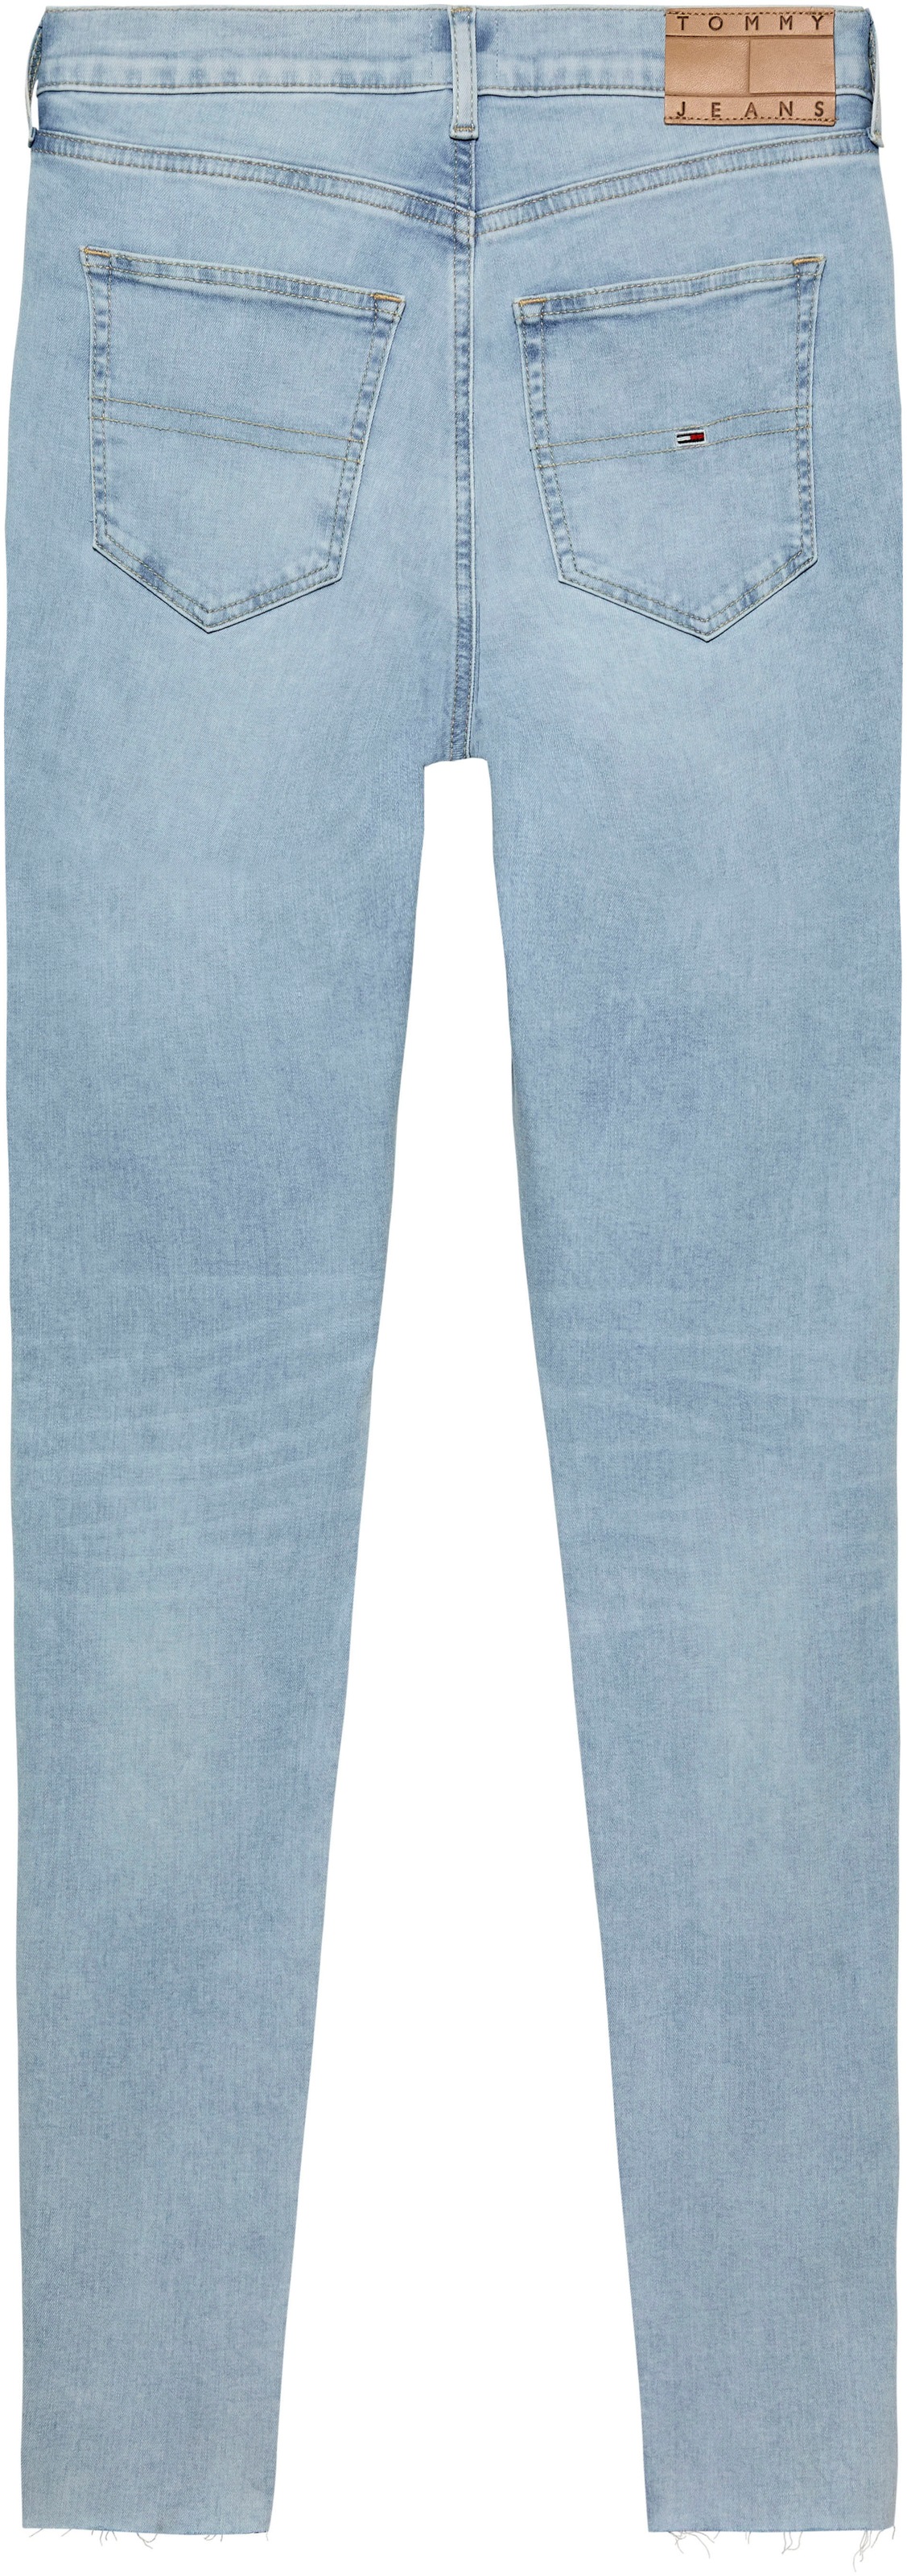 Tommy Jeans Bequeme Jeans online mit bei »Sylvia«, Ledermarkenlabel